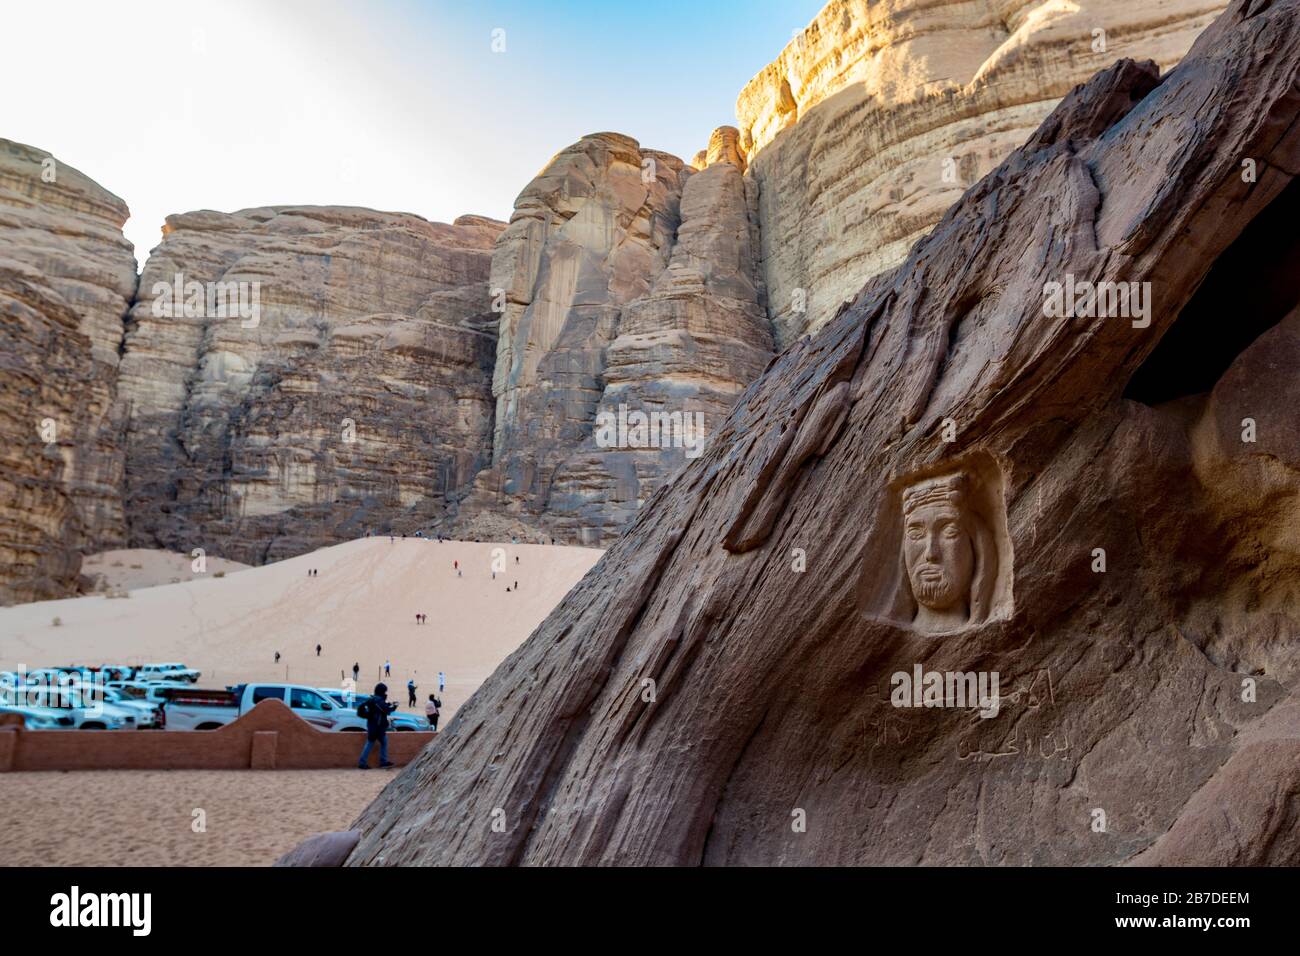 WADI RUM, JORDAN - JANUARY 31, 2020: Lawrence of Arabia head is carved into the stone in Wadi Rum desert, Jordan. Winter landscape view, safari travel in the beautiful kingdom Stock Photo